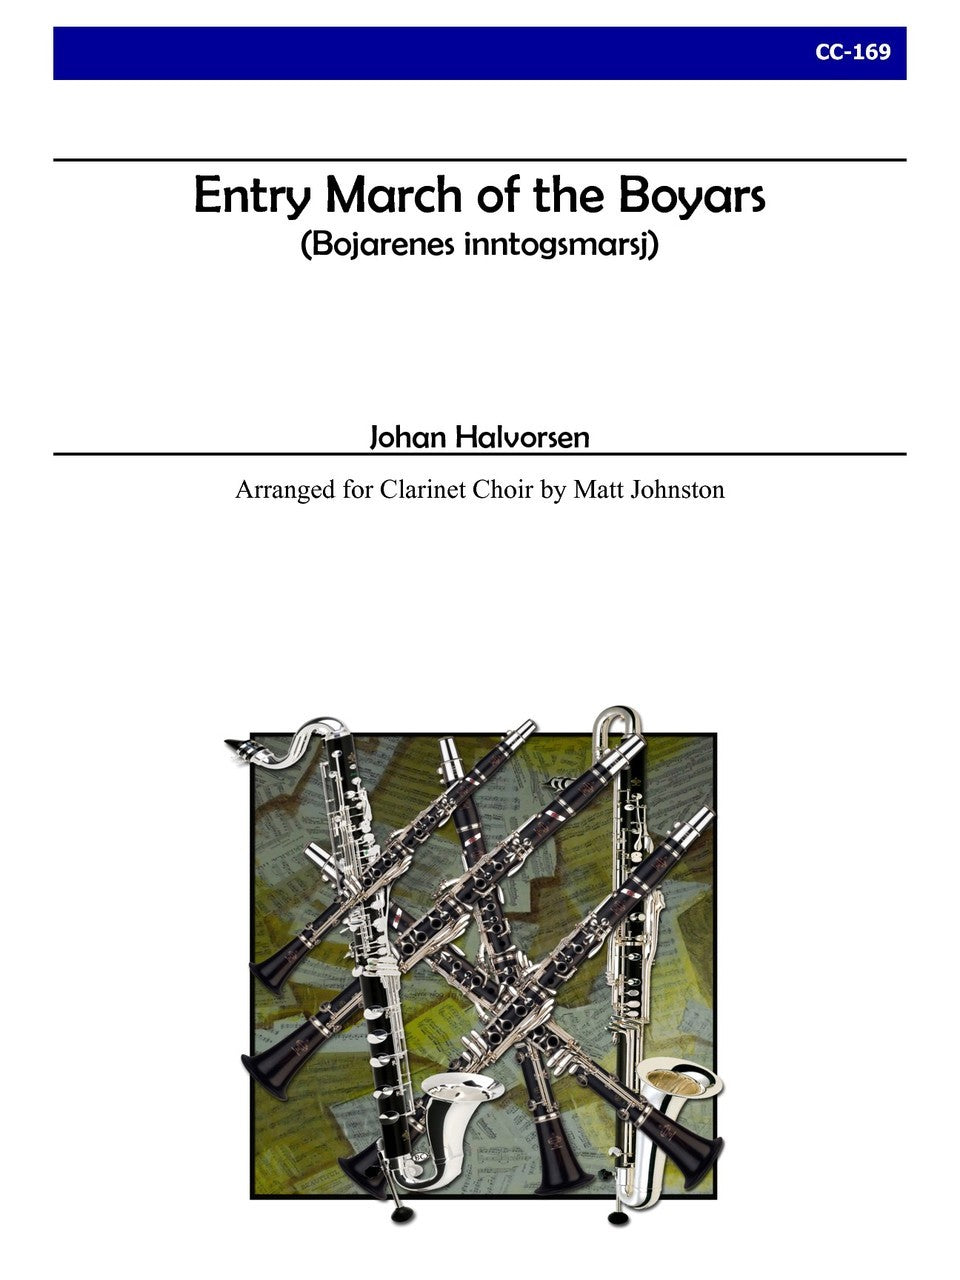 Halvorsen (arr. Matt Johnston) - Entry March of the Boyars for Clarinet Choir